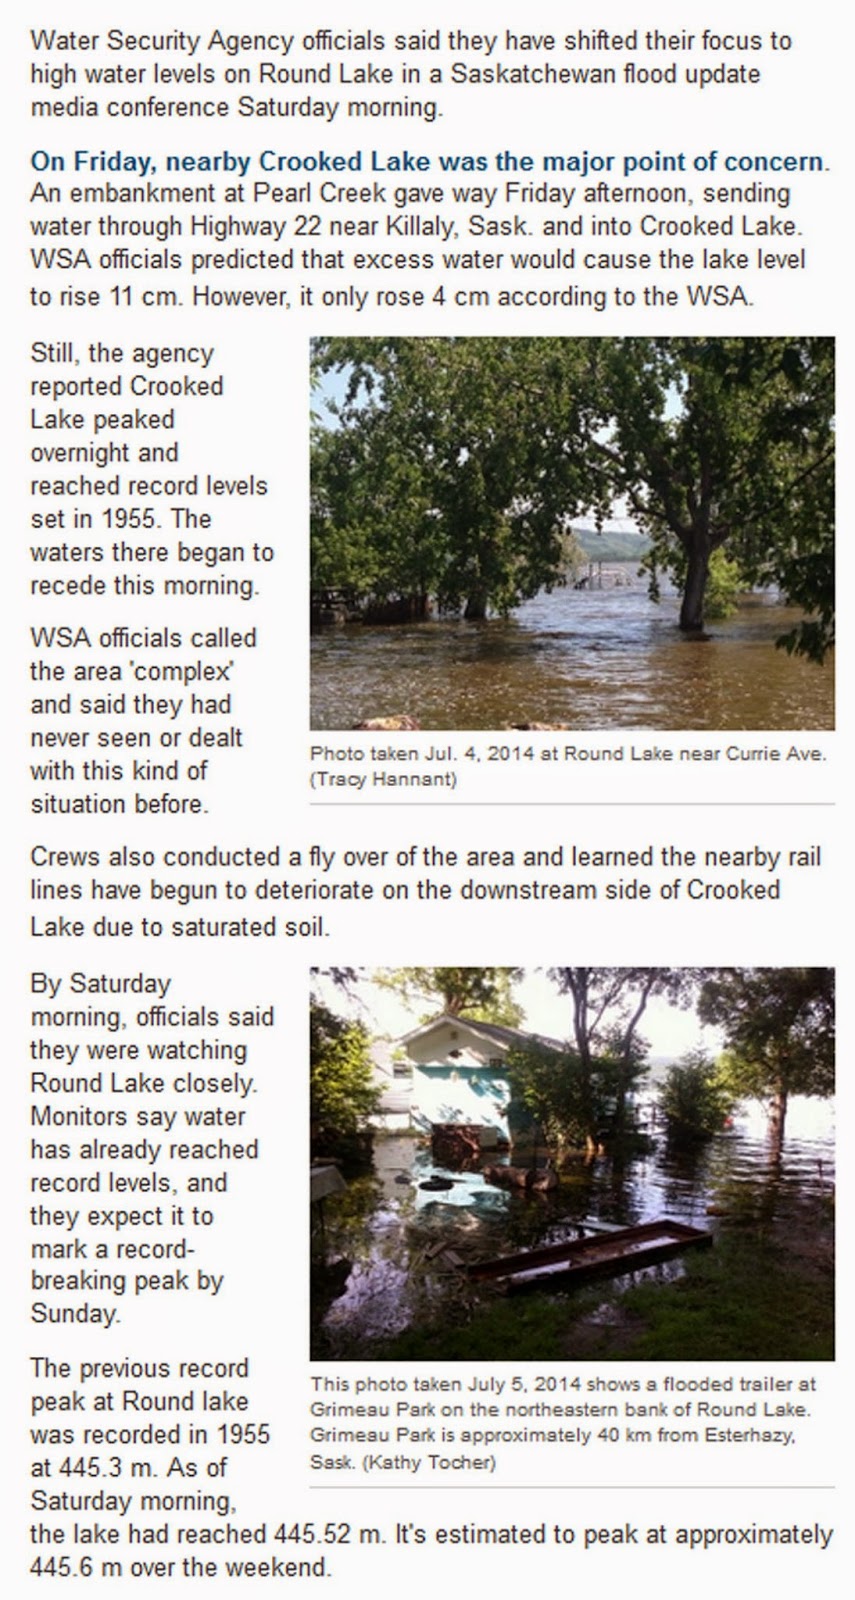 http://www.cbc.ca/news/canada/saskatchewan/water-security-agency-expects-record-round-lake-peak-sunday-1.2697624